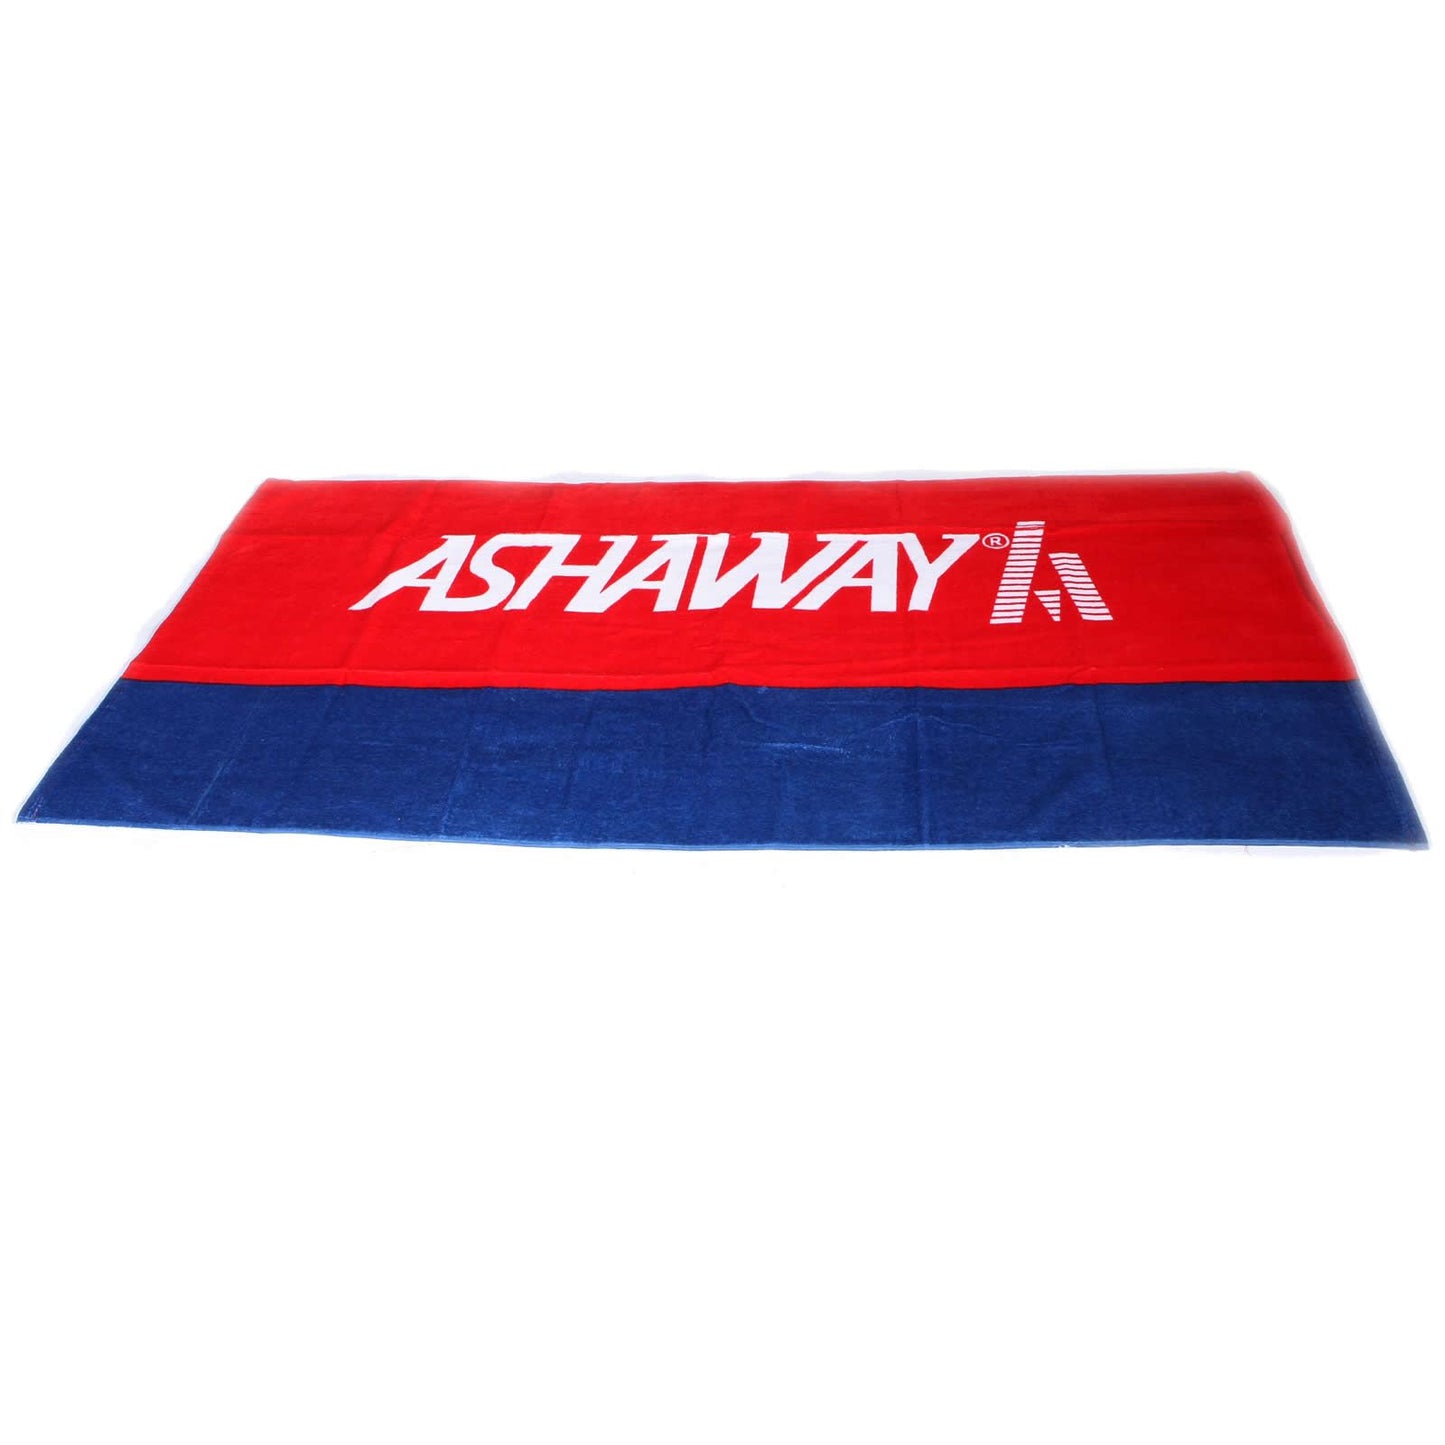 Ashaway Badminton Towel